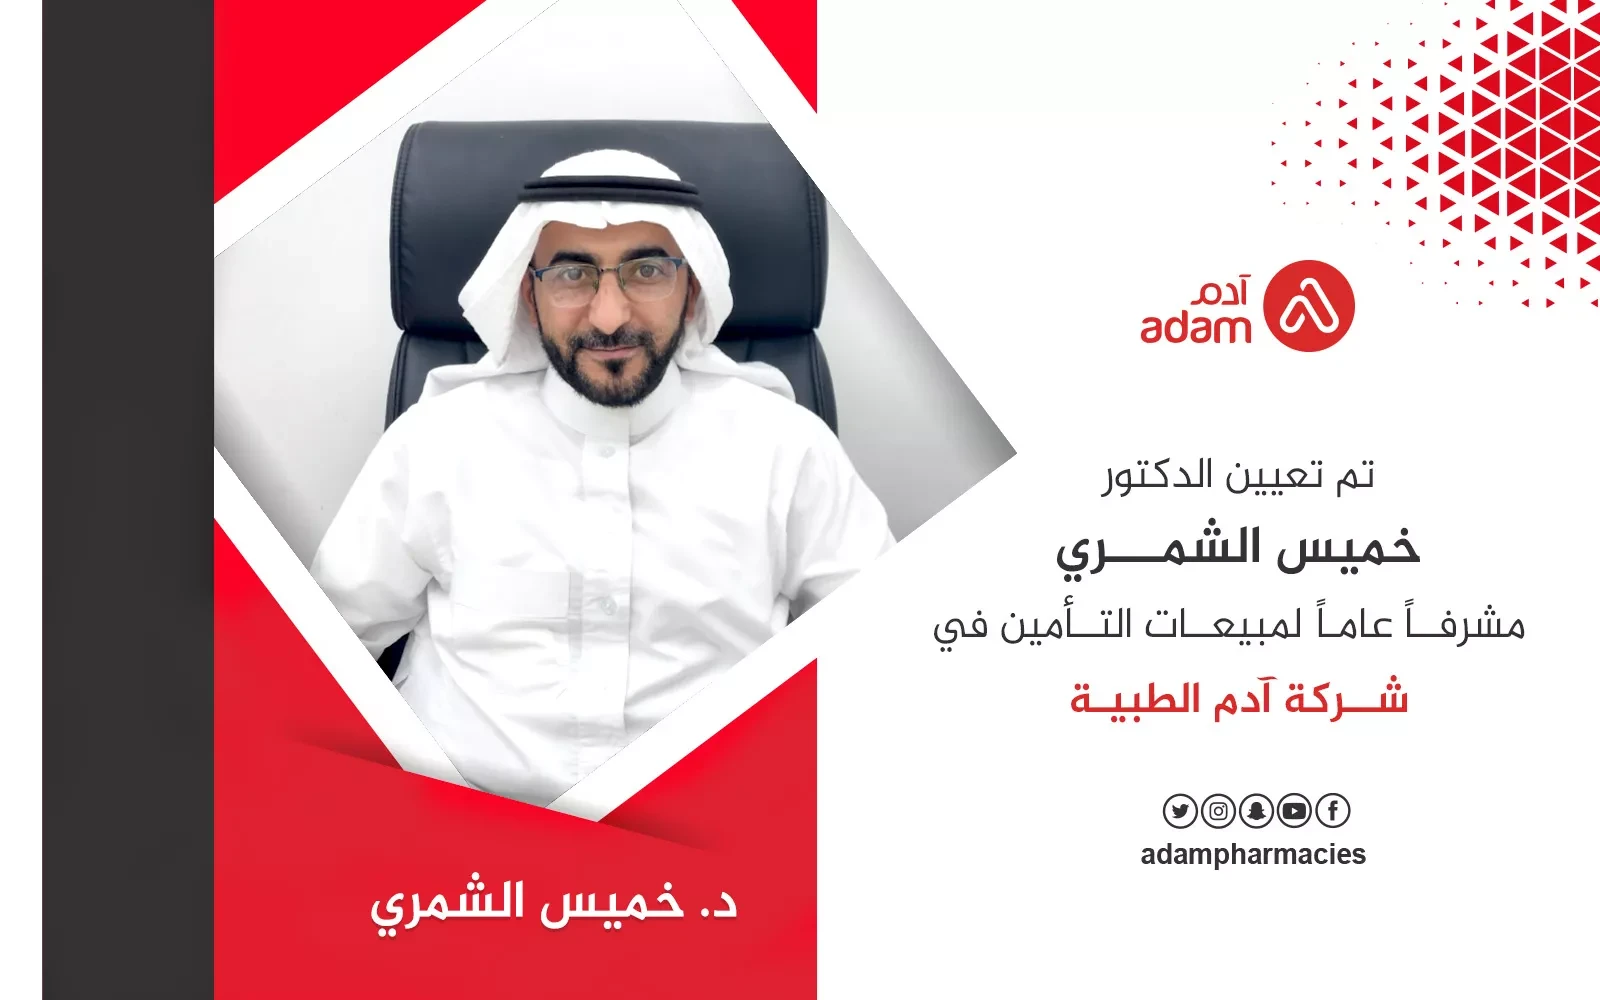 Dr. Khamis Al-Shammari, General Supervisor of Insurance Sales at Adam Pharmacies Group